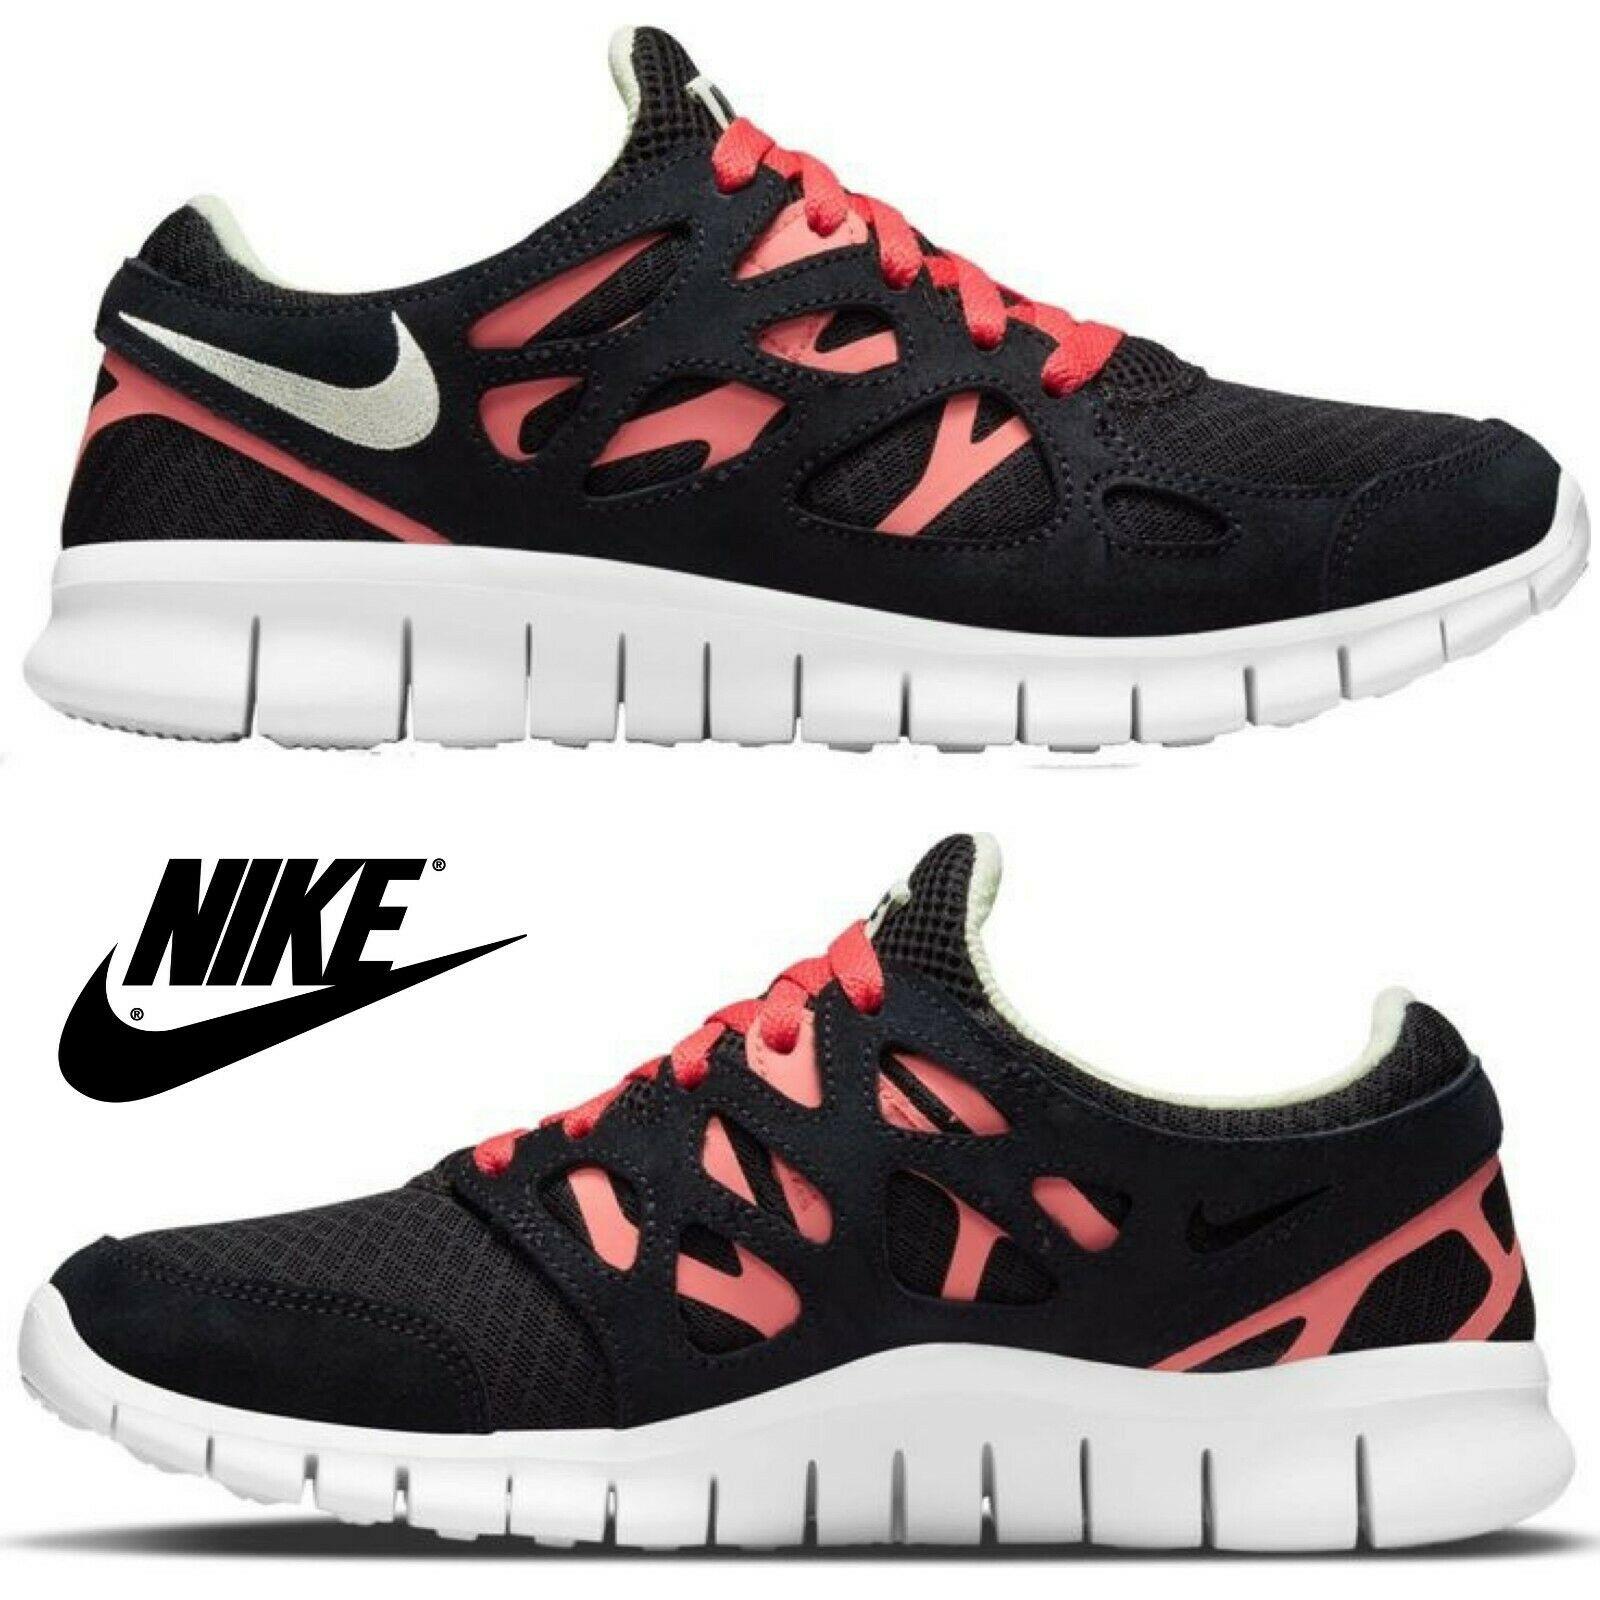 Nike Women`s Free Run 2 Shoes Casual Premium Running Sneakers Sport Gym Black